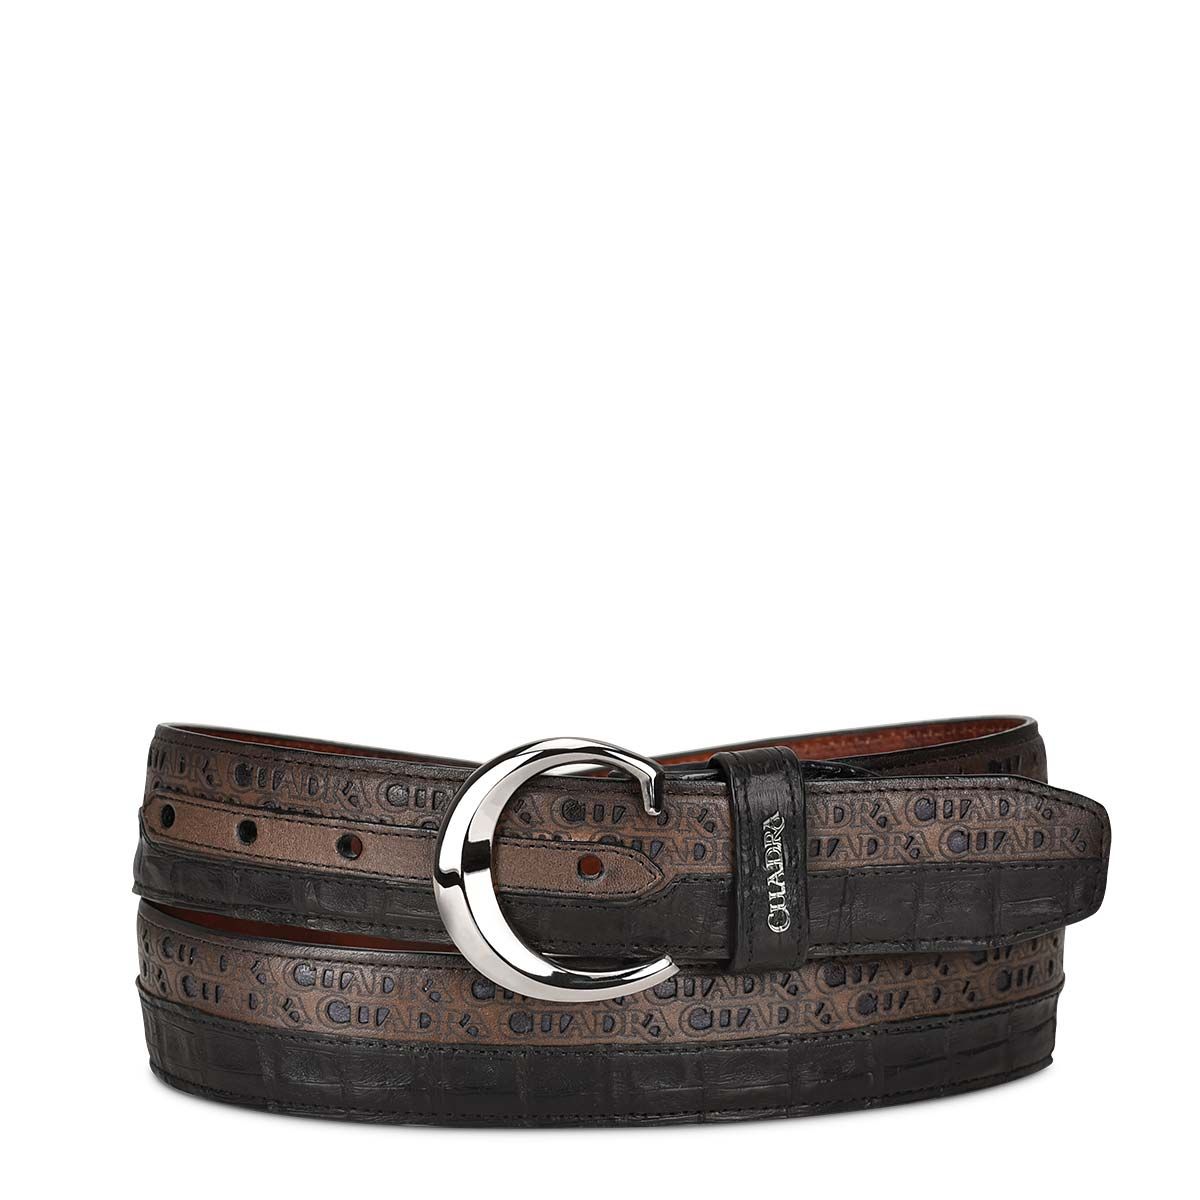 Engraved exotic bi-tone leather belt